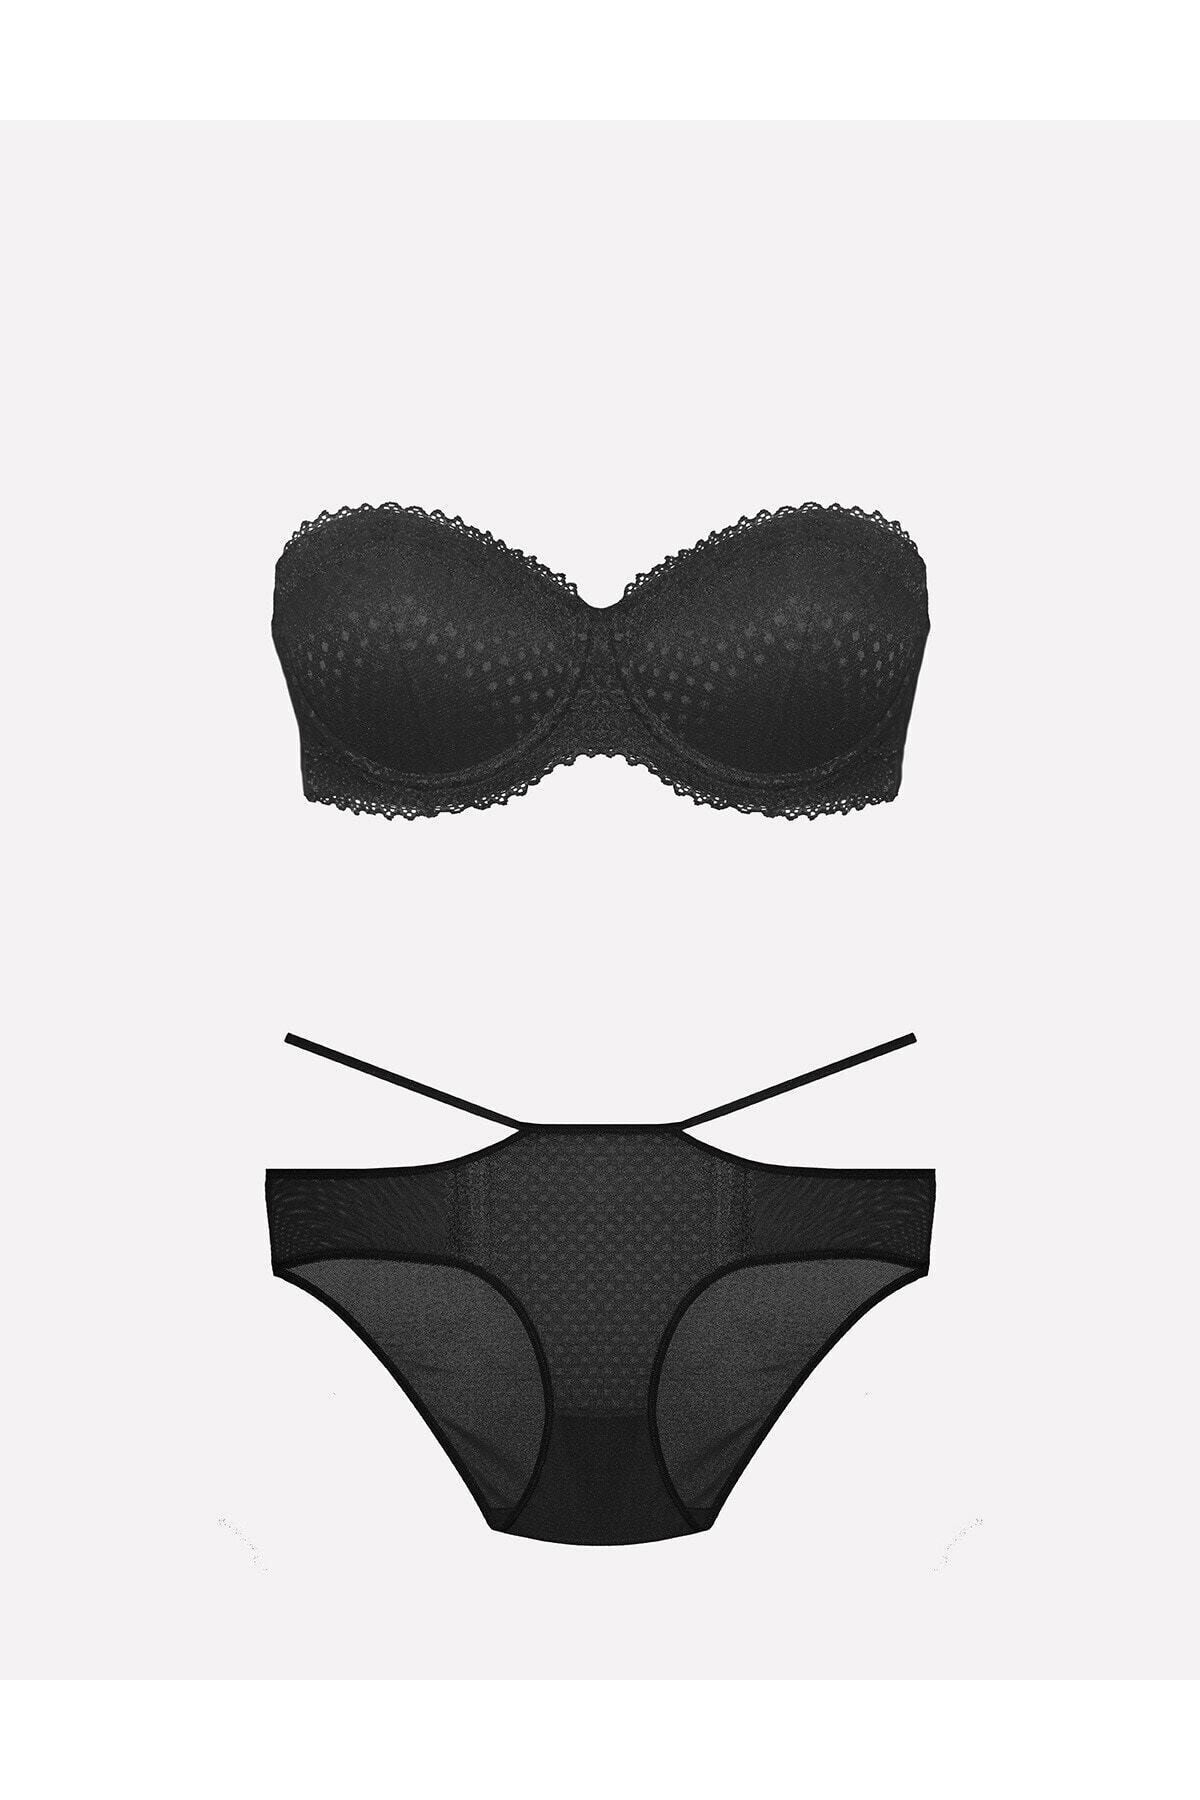 Nurteks Women's Black Padded Push-up Strapless Bra and Panties Set 75-90b -  Trendyol